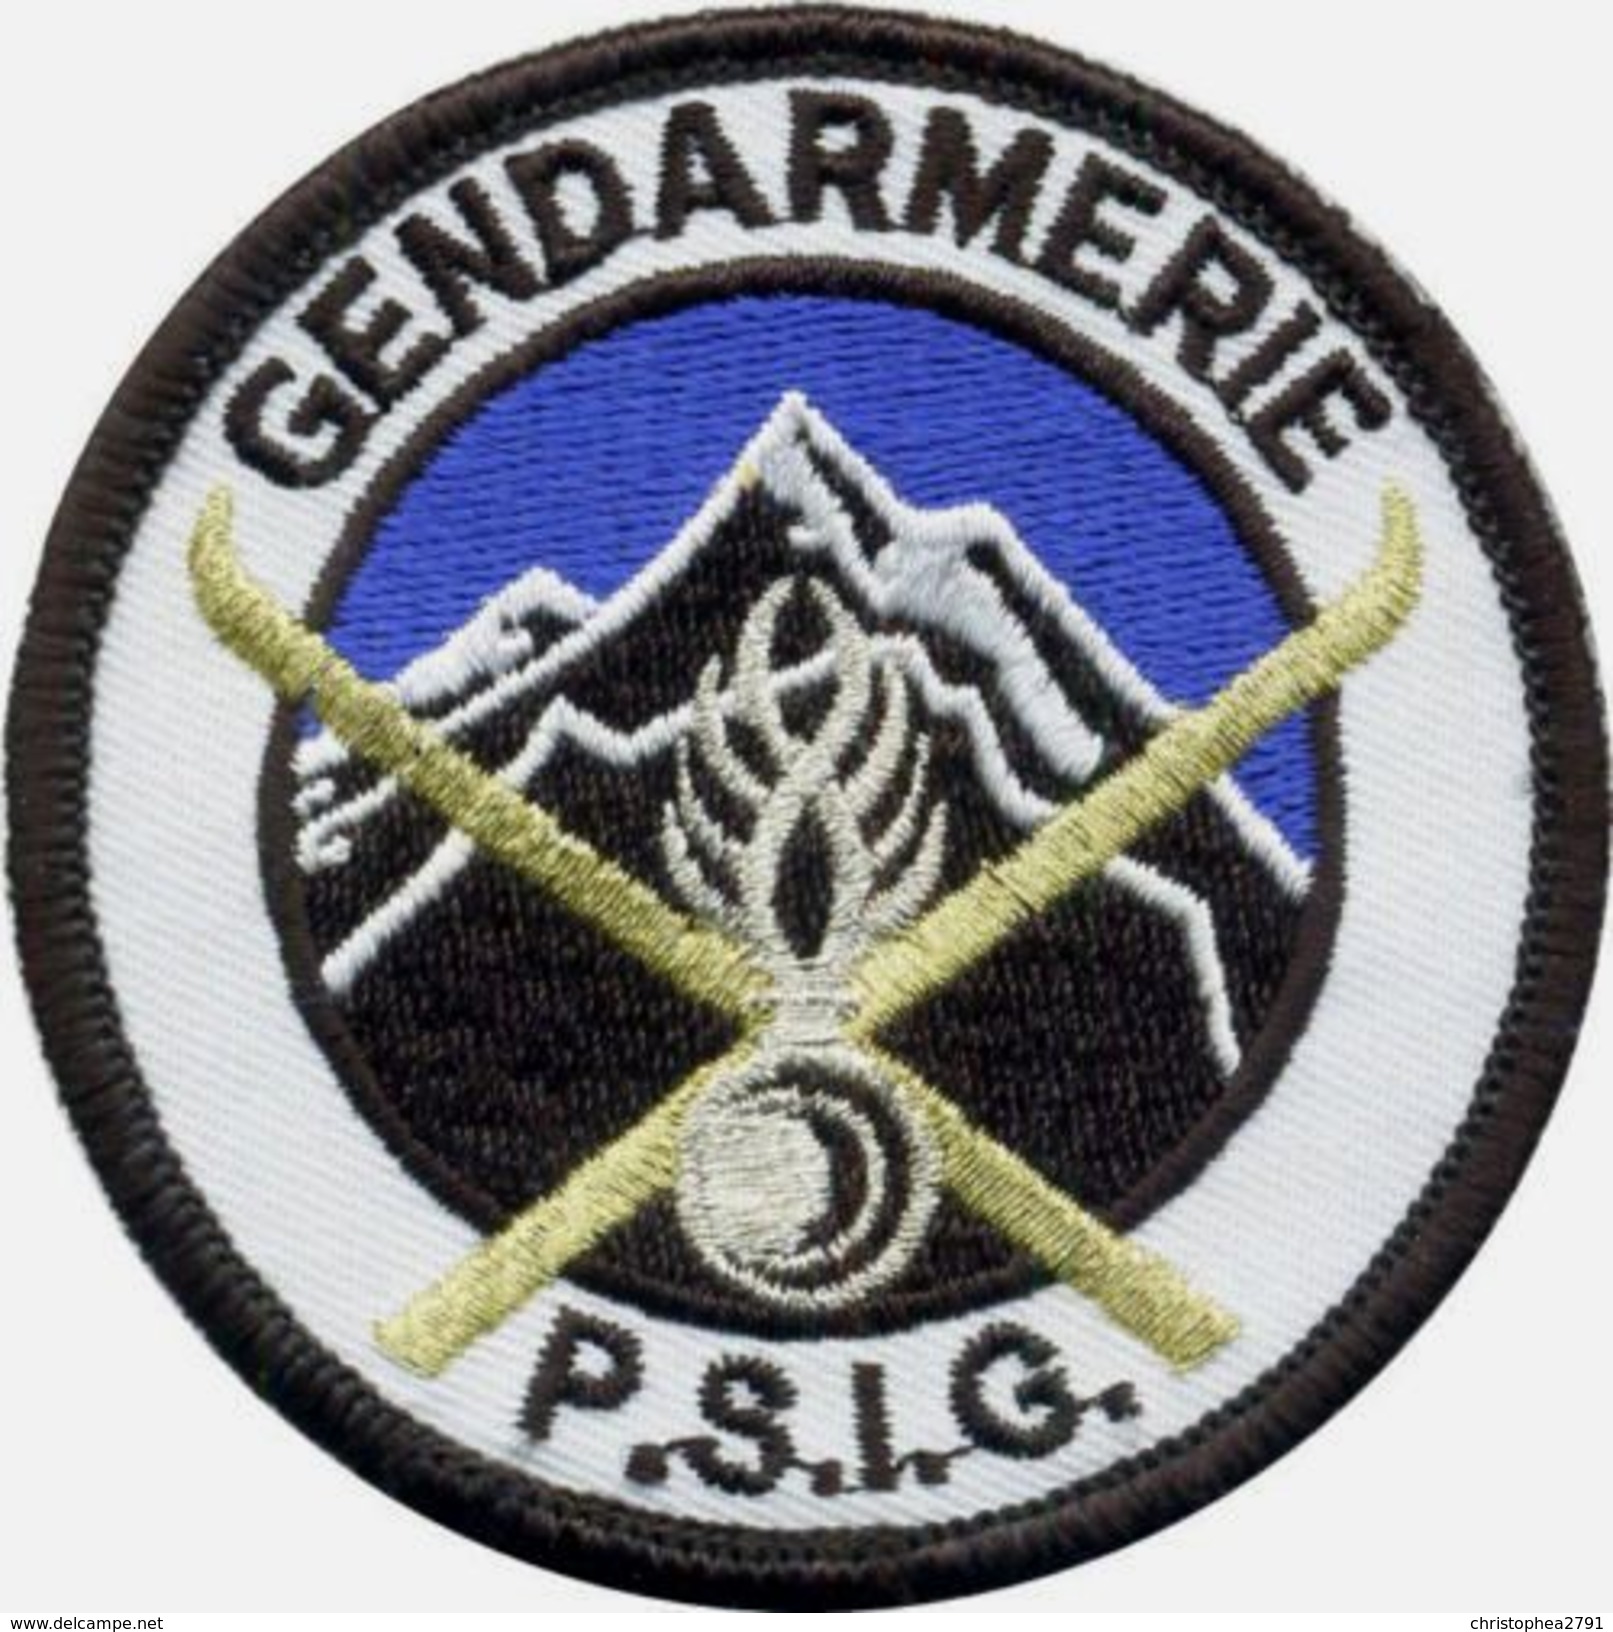 INSIGNE TISSUS PATCH GENDARMERIE NATIONALE PSIG MONTAGNE (GRENADE ARGENTEE) SUR VELCROS ETAT EXCELLENT - Police & Gendarmerie